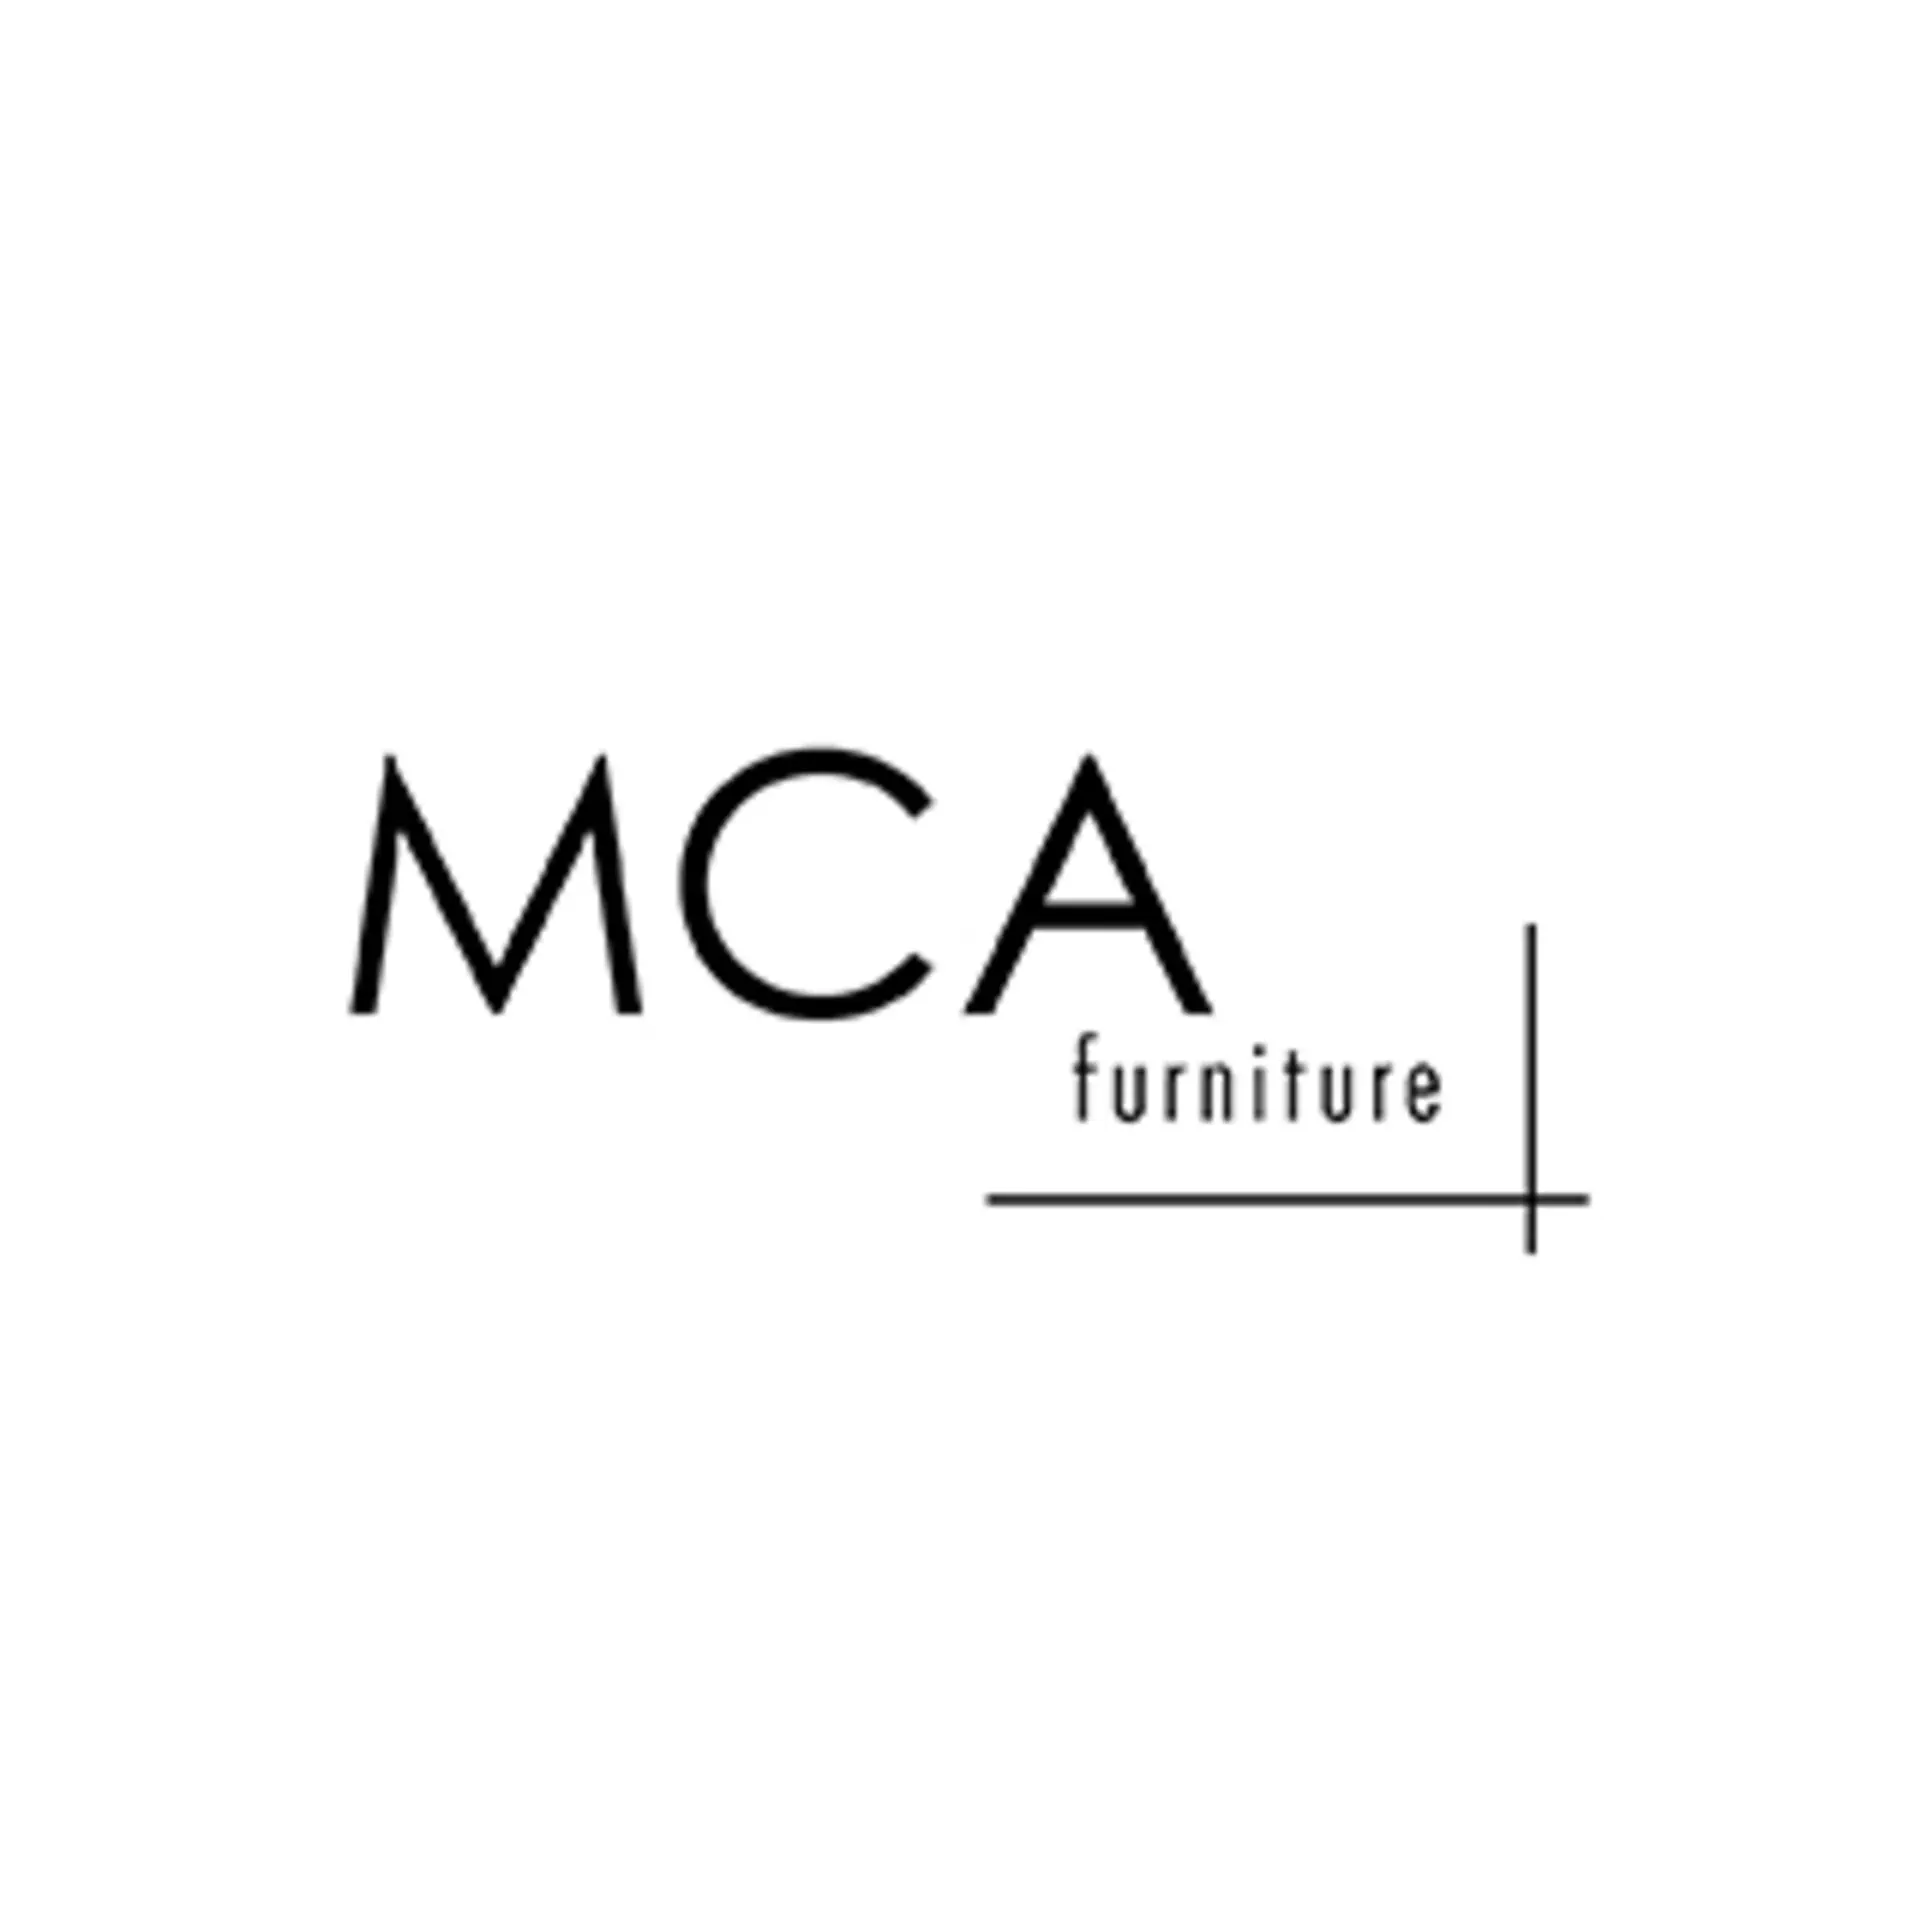 MCA-furniture Logo